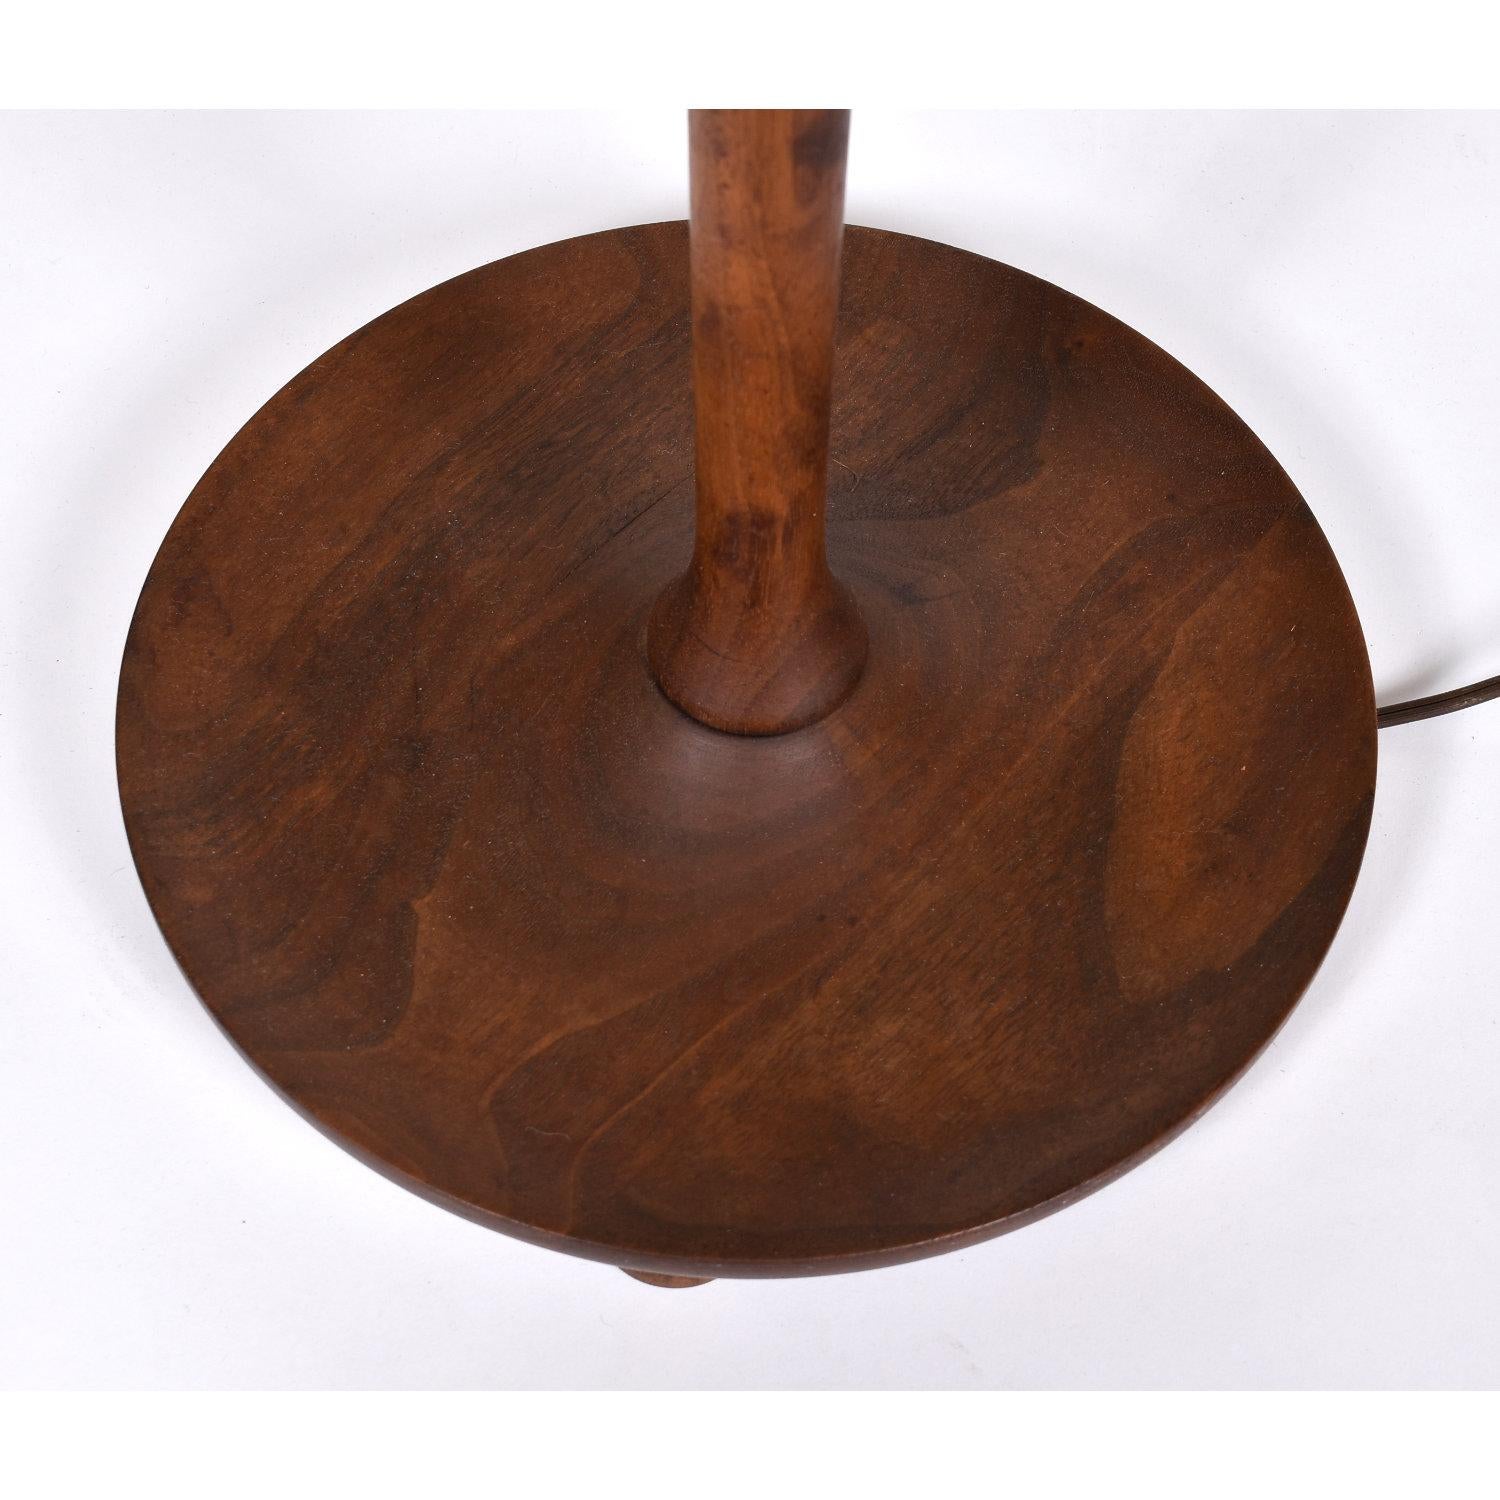 Fiberglass Vintage Danish Modern Walnut Floor Lamp with Matching Table Lamp